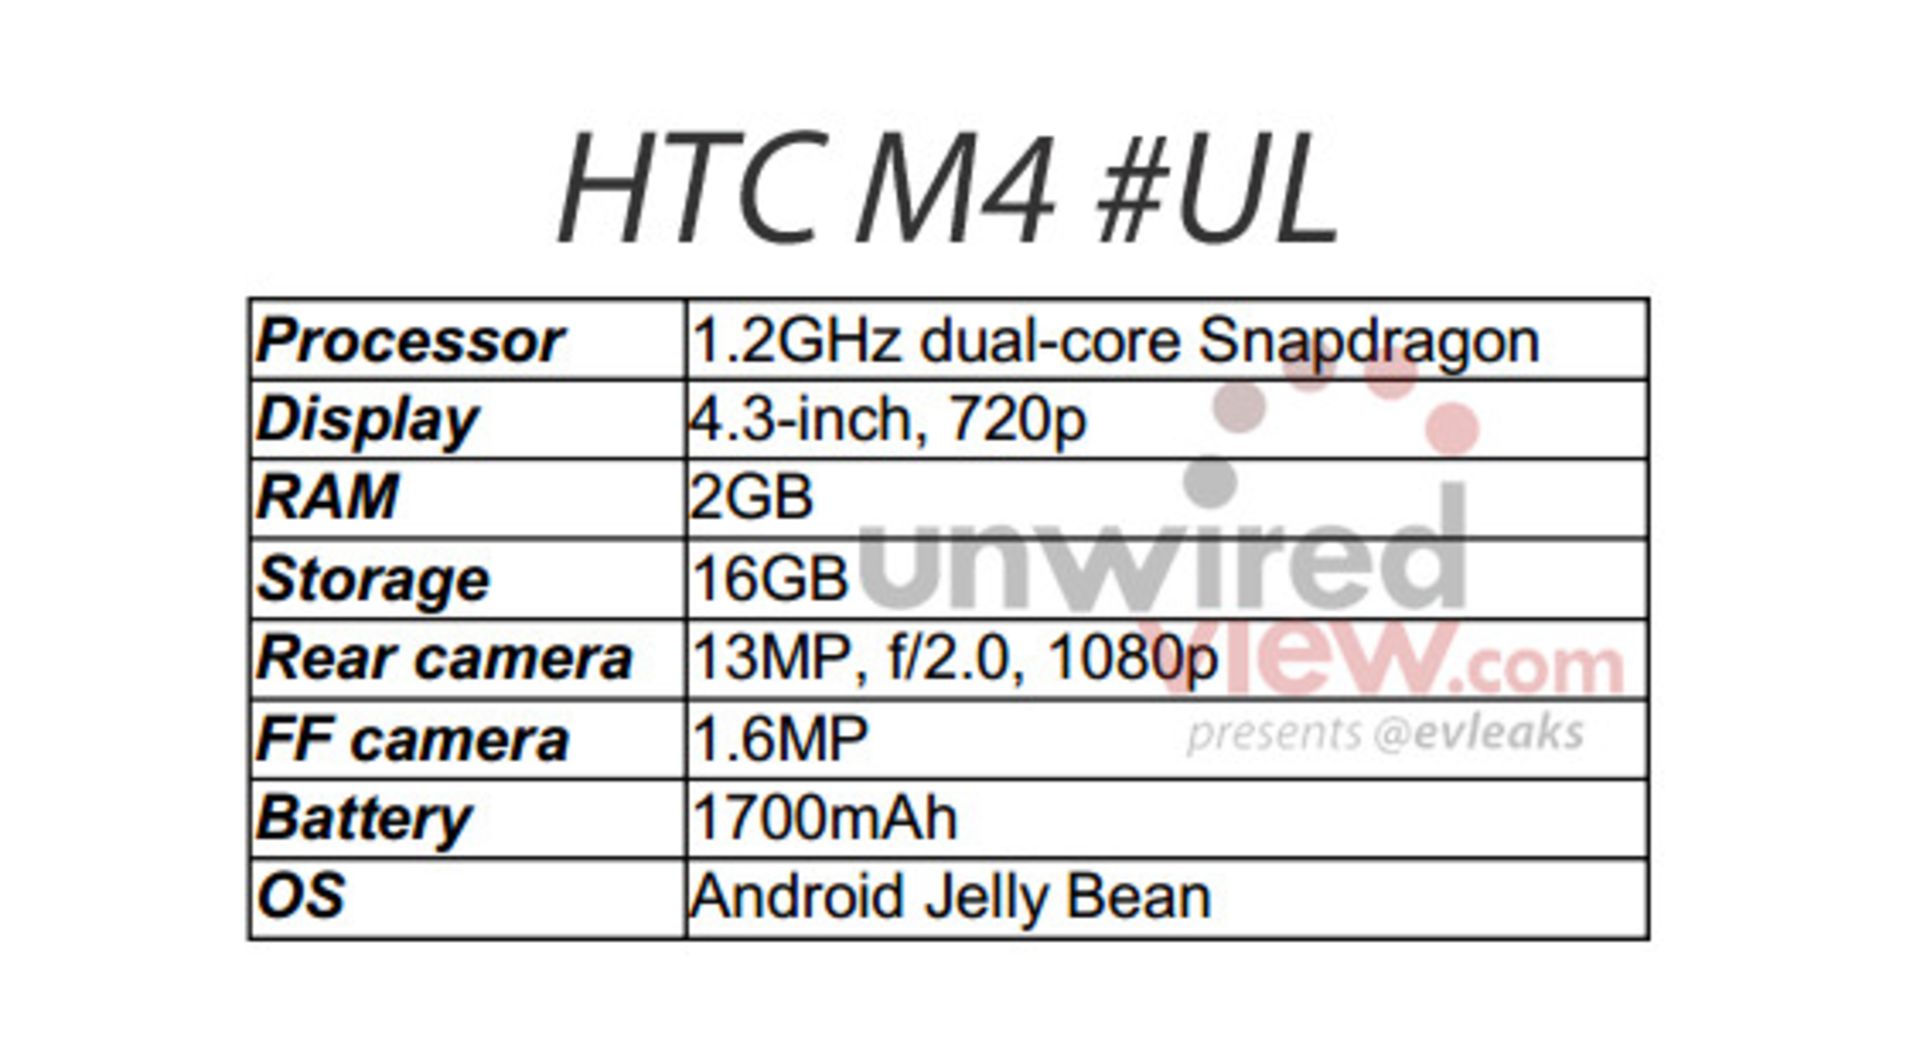 HTC M4 spec listing